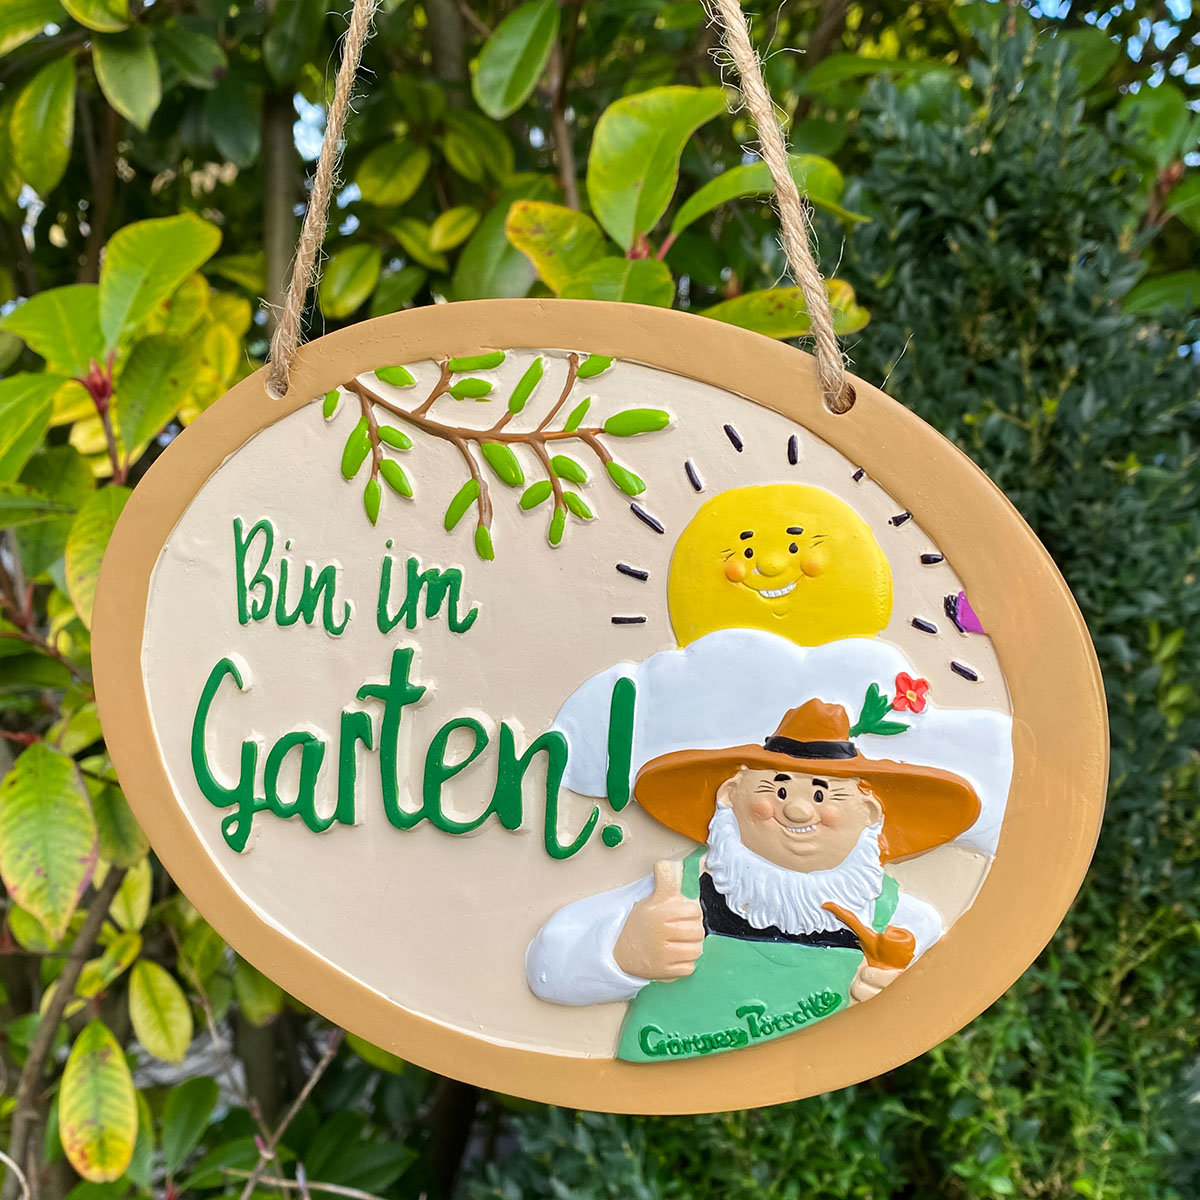 Gartenschild "Bin im Garten"
| #2